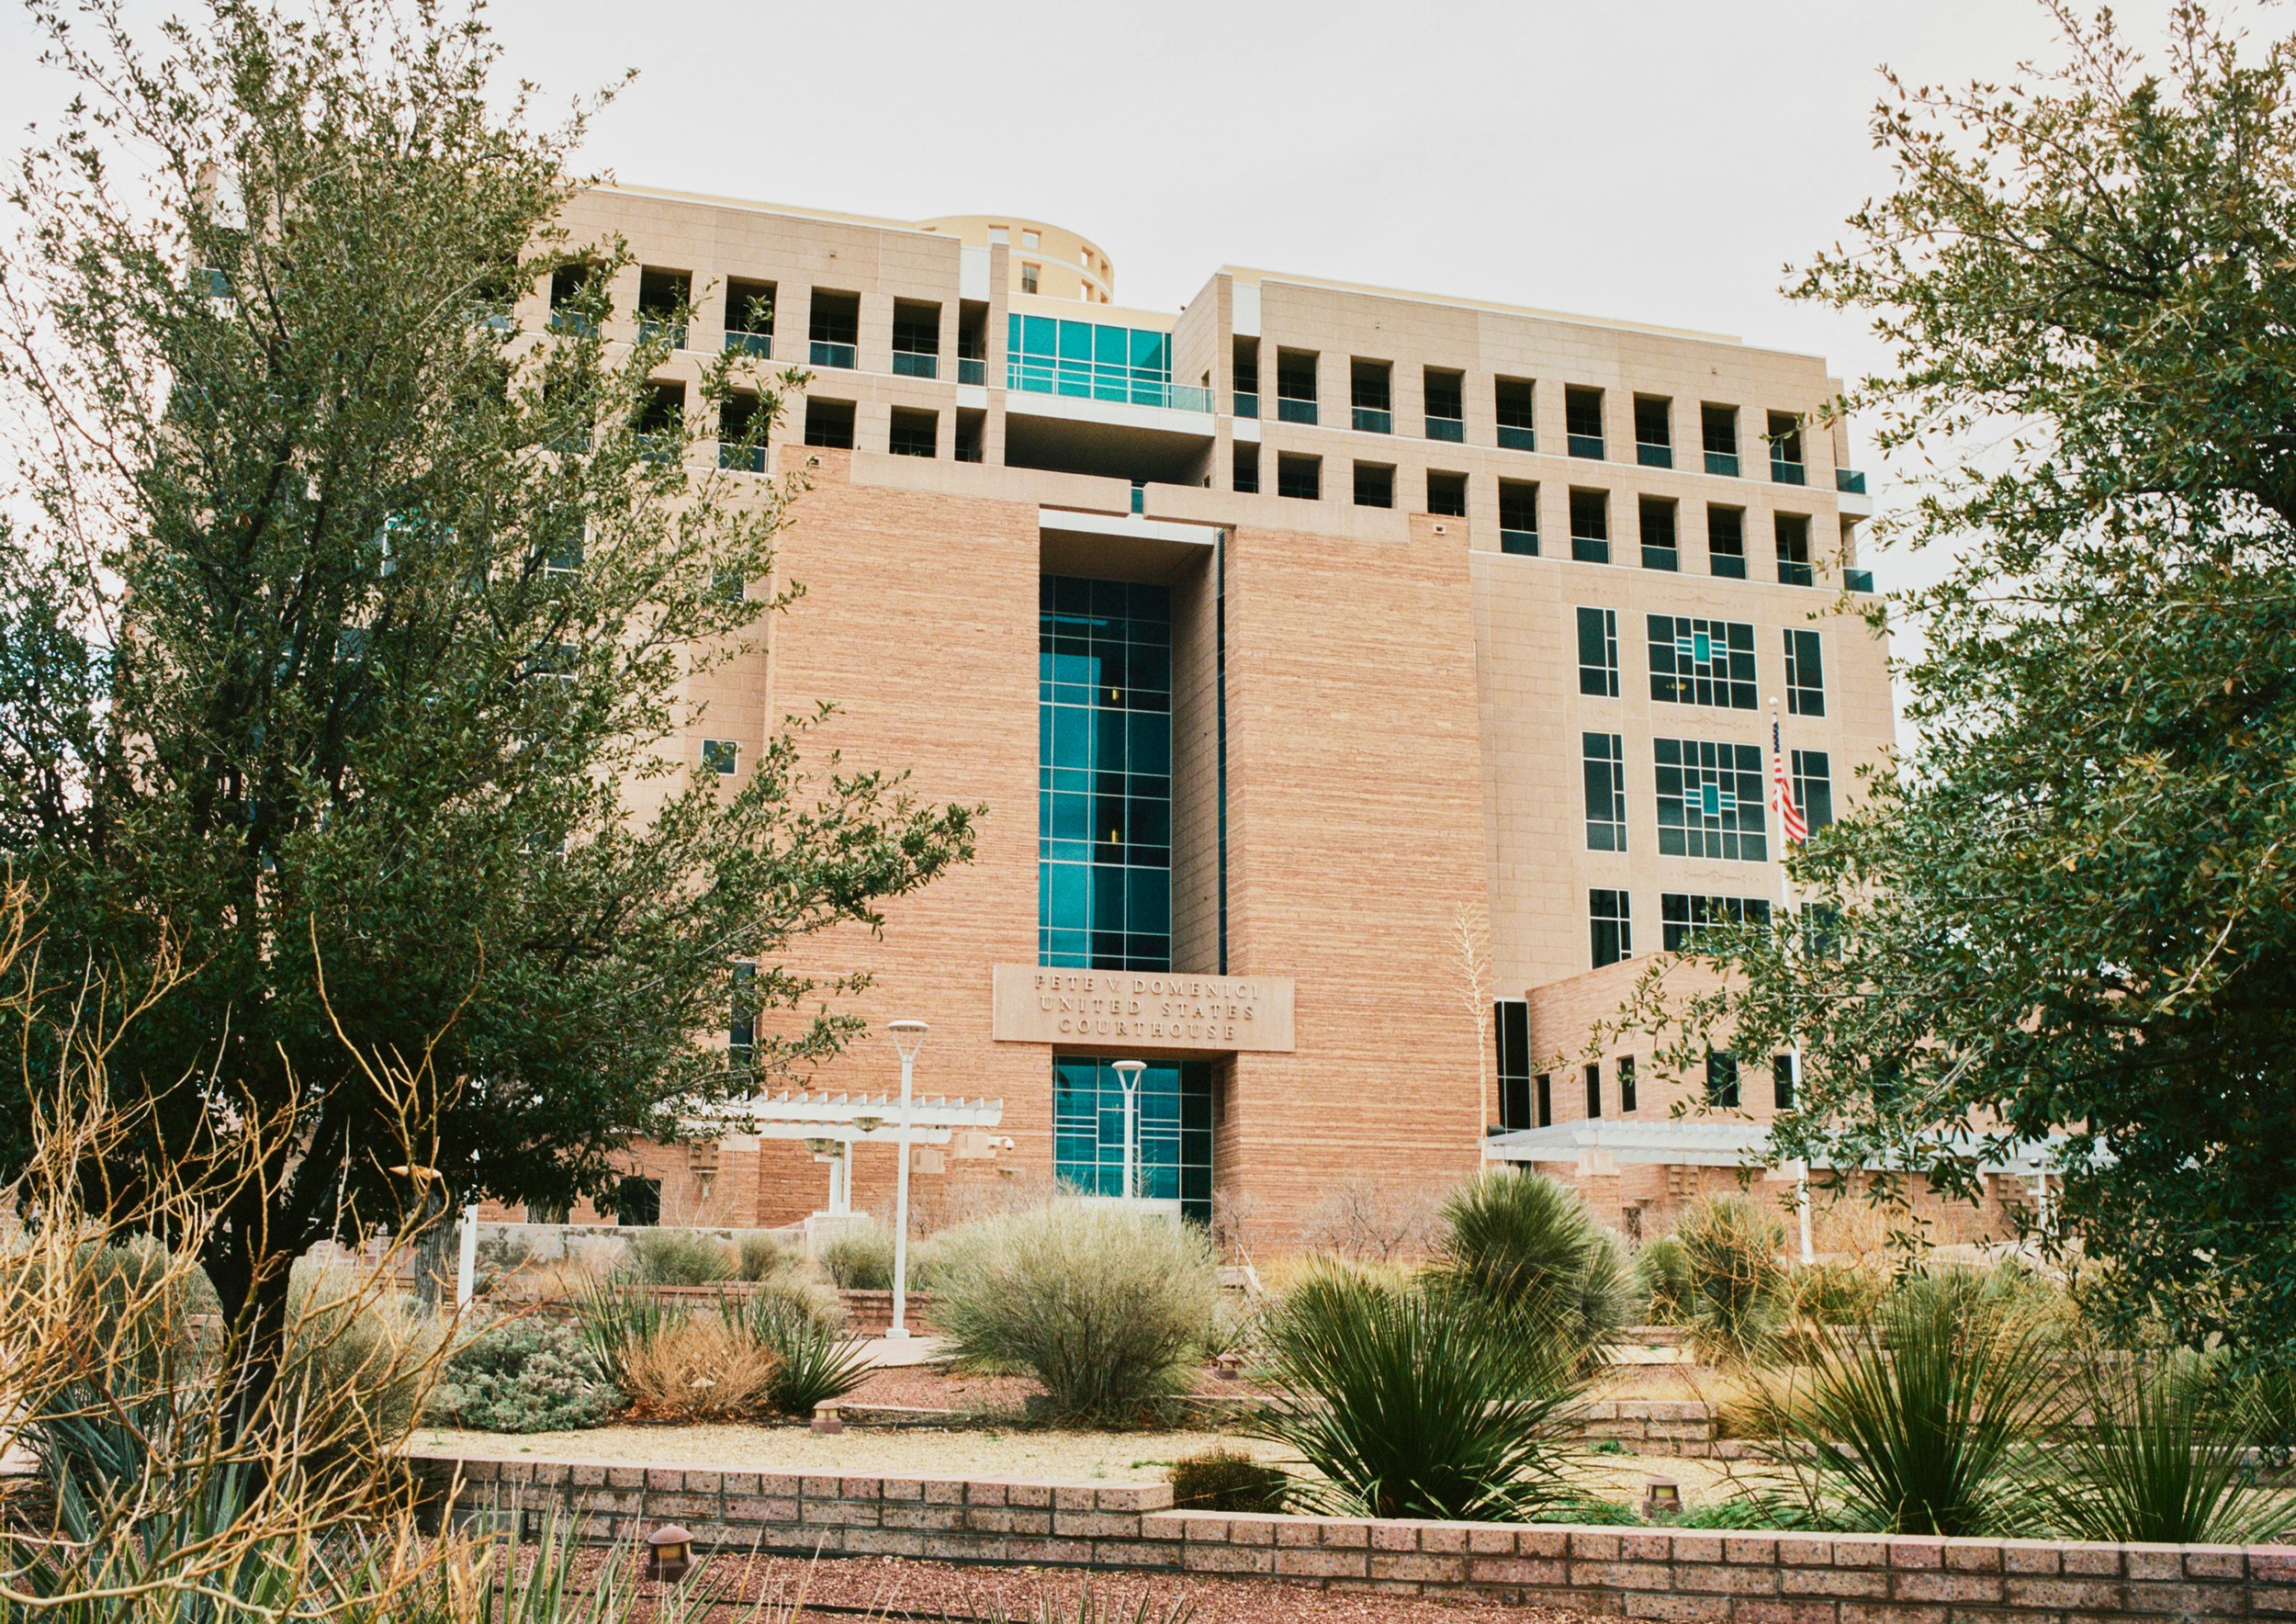 Albuquerque Federal Courthouse Building